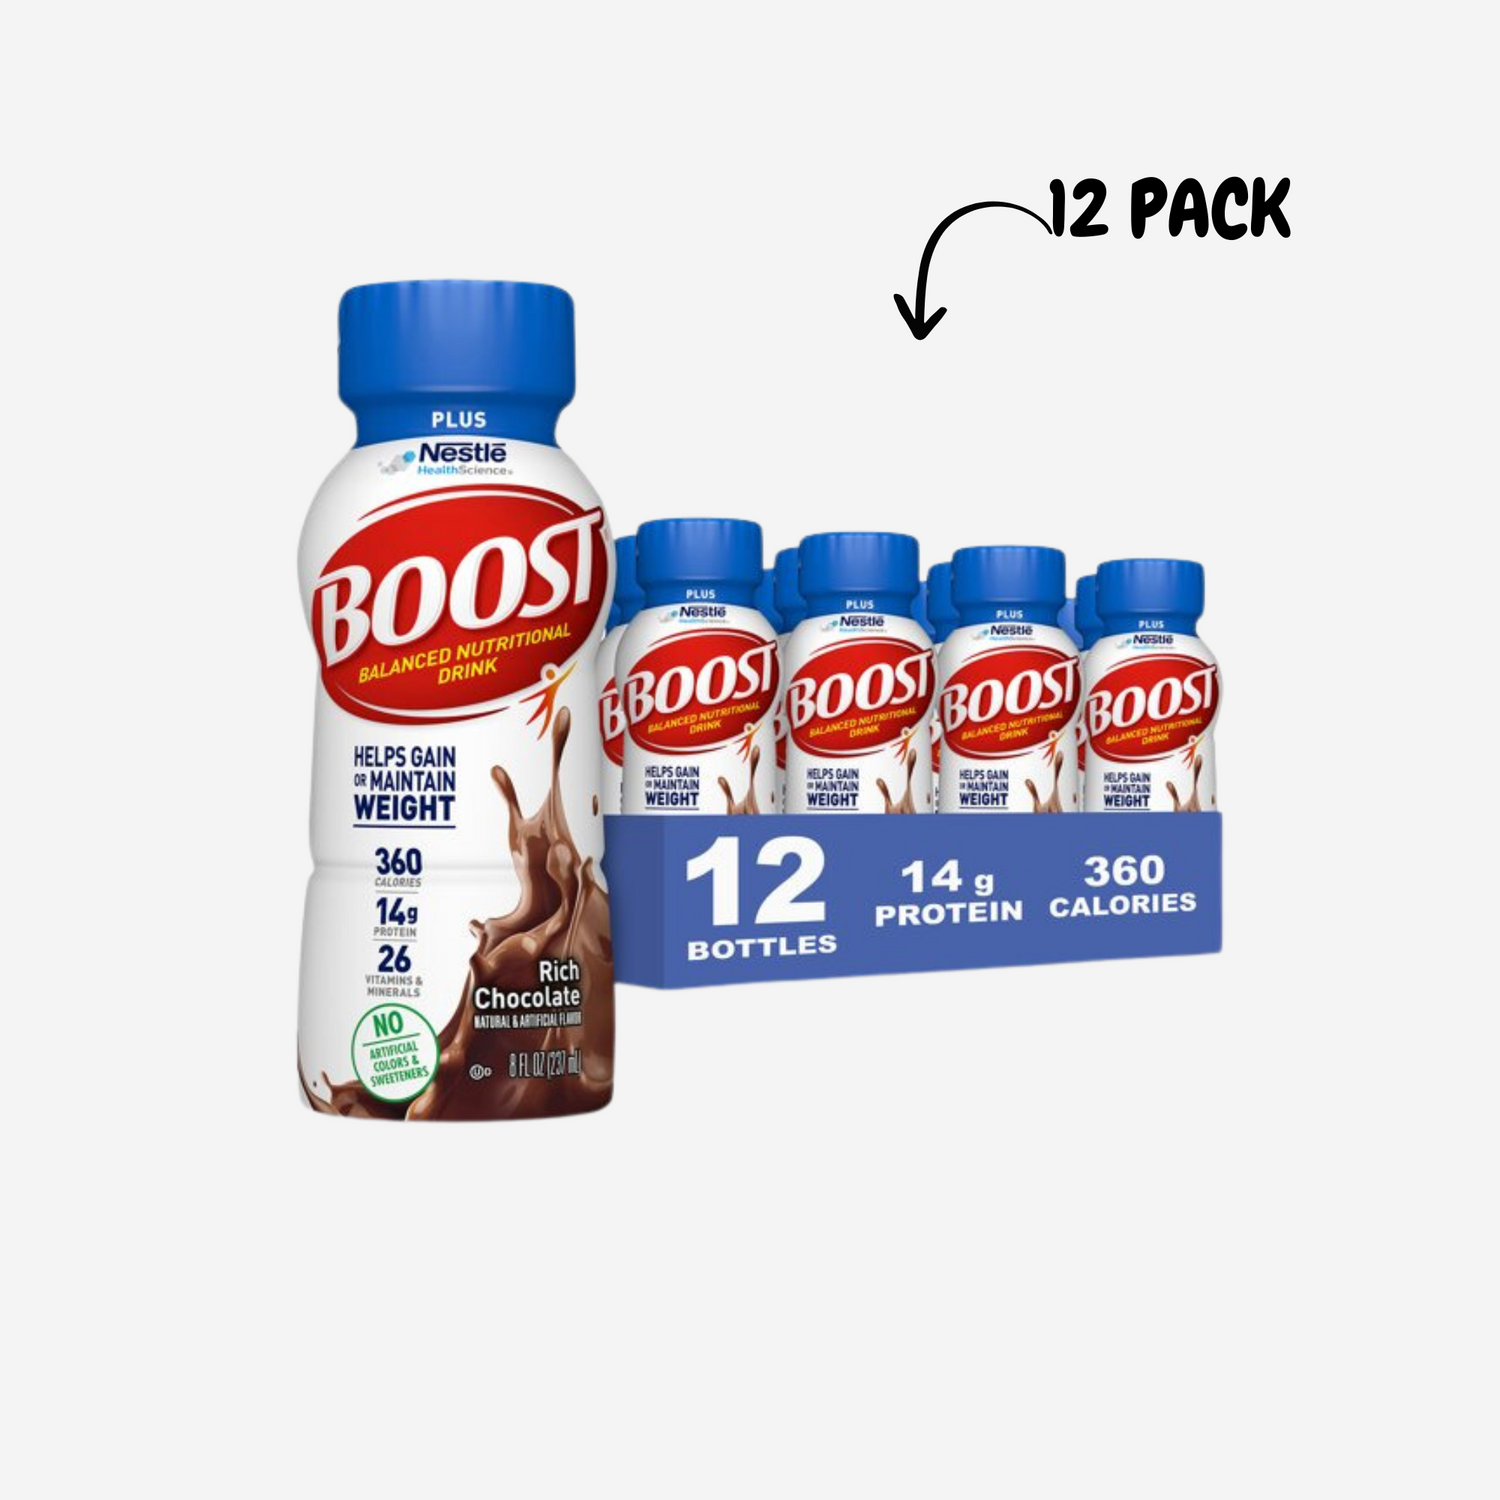 BOOST PLUS Nutritional Drink, Rich Chocolate, 14g Protein, 12-8 fl oz Bottles